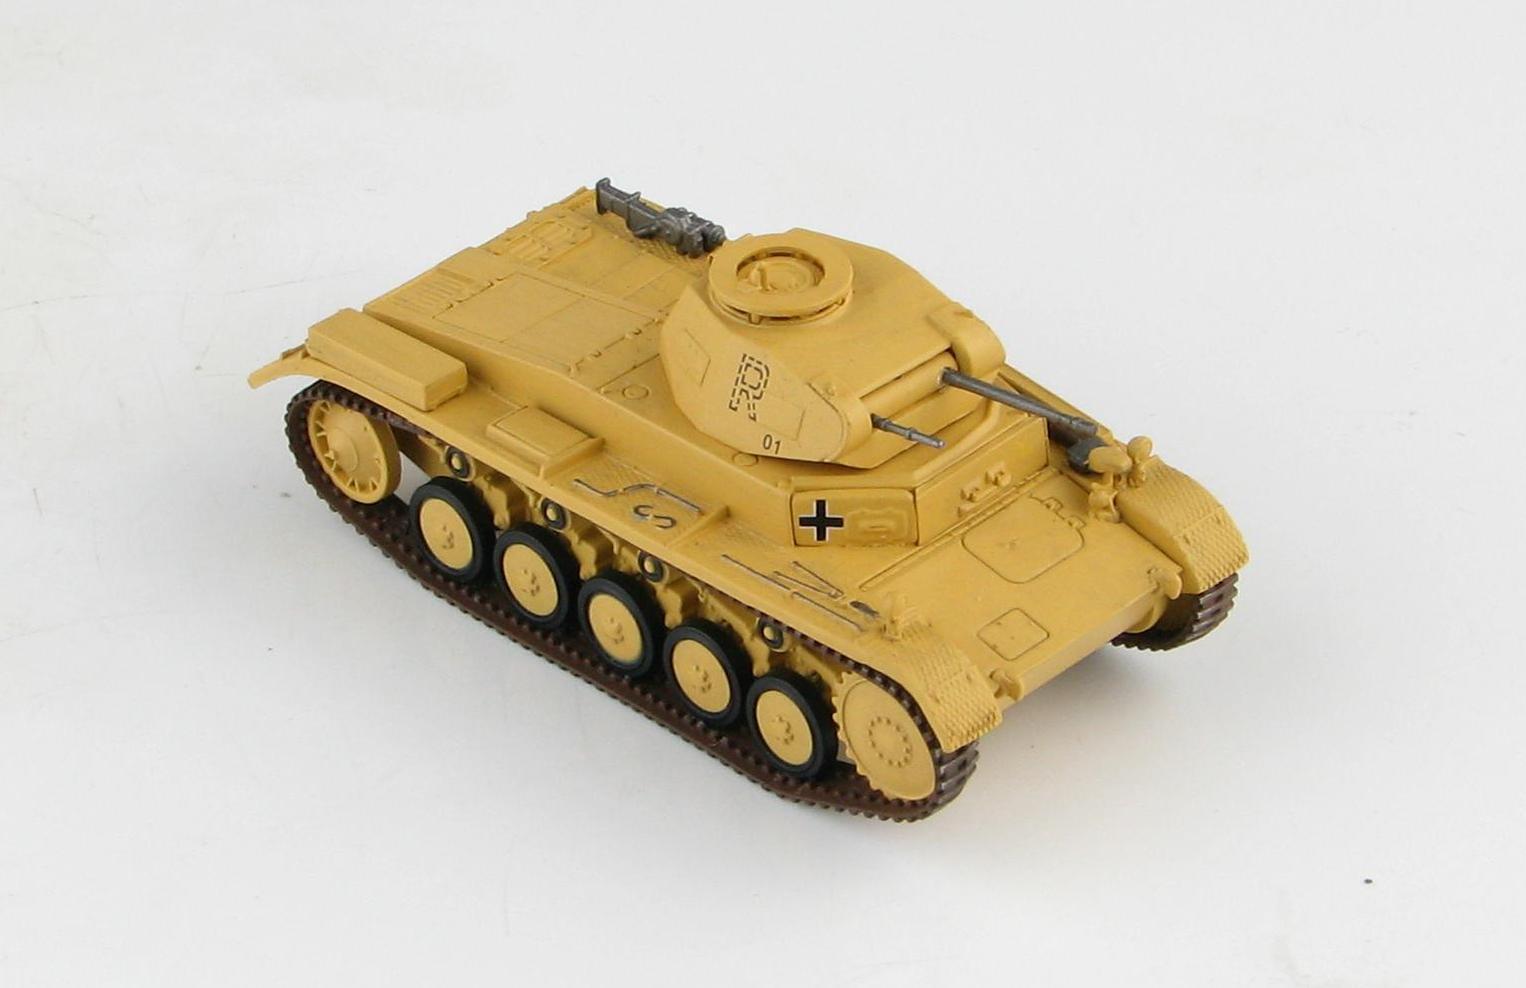 HG 4607 - Panzer II Ausf. F